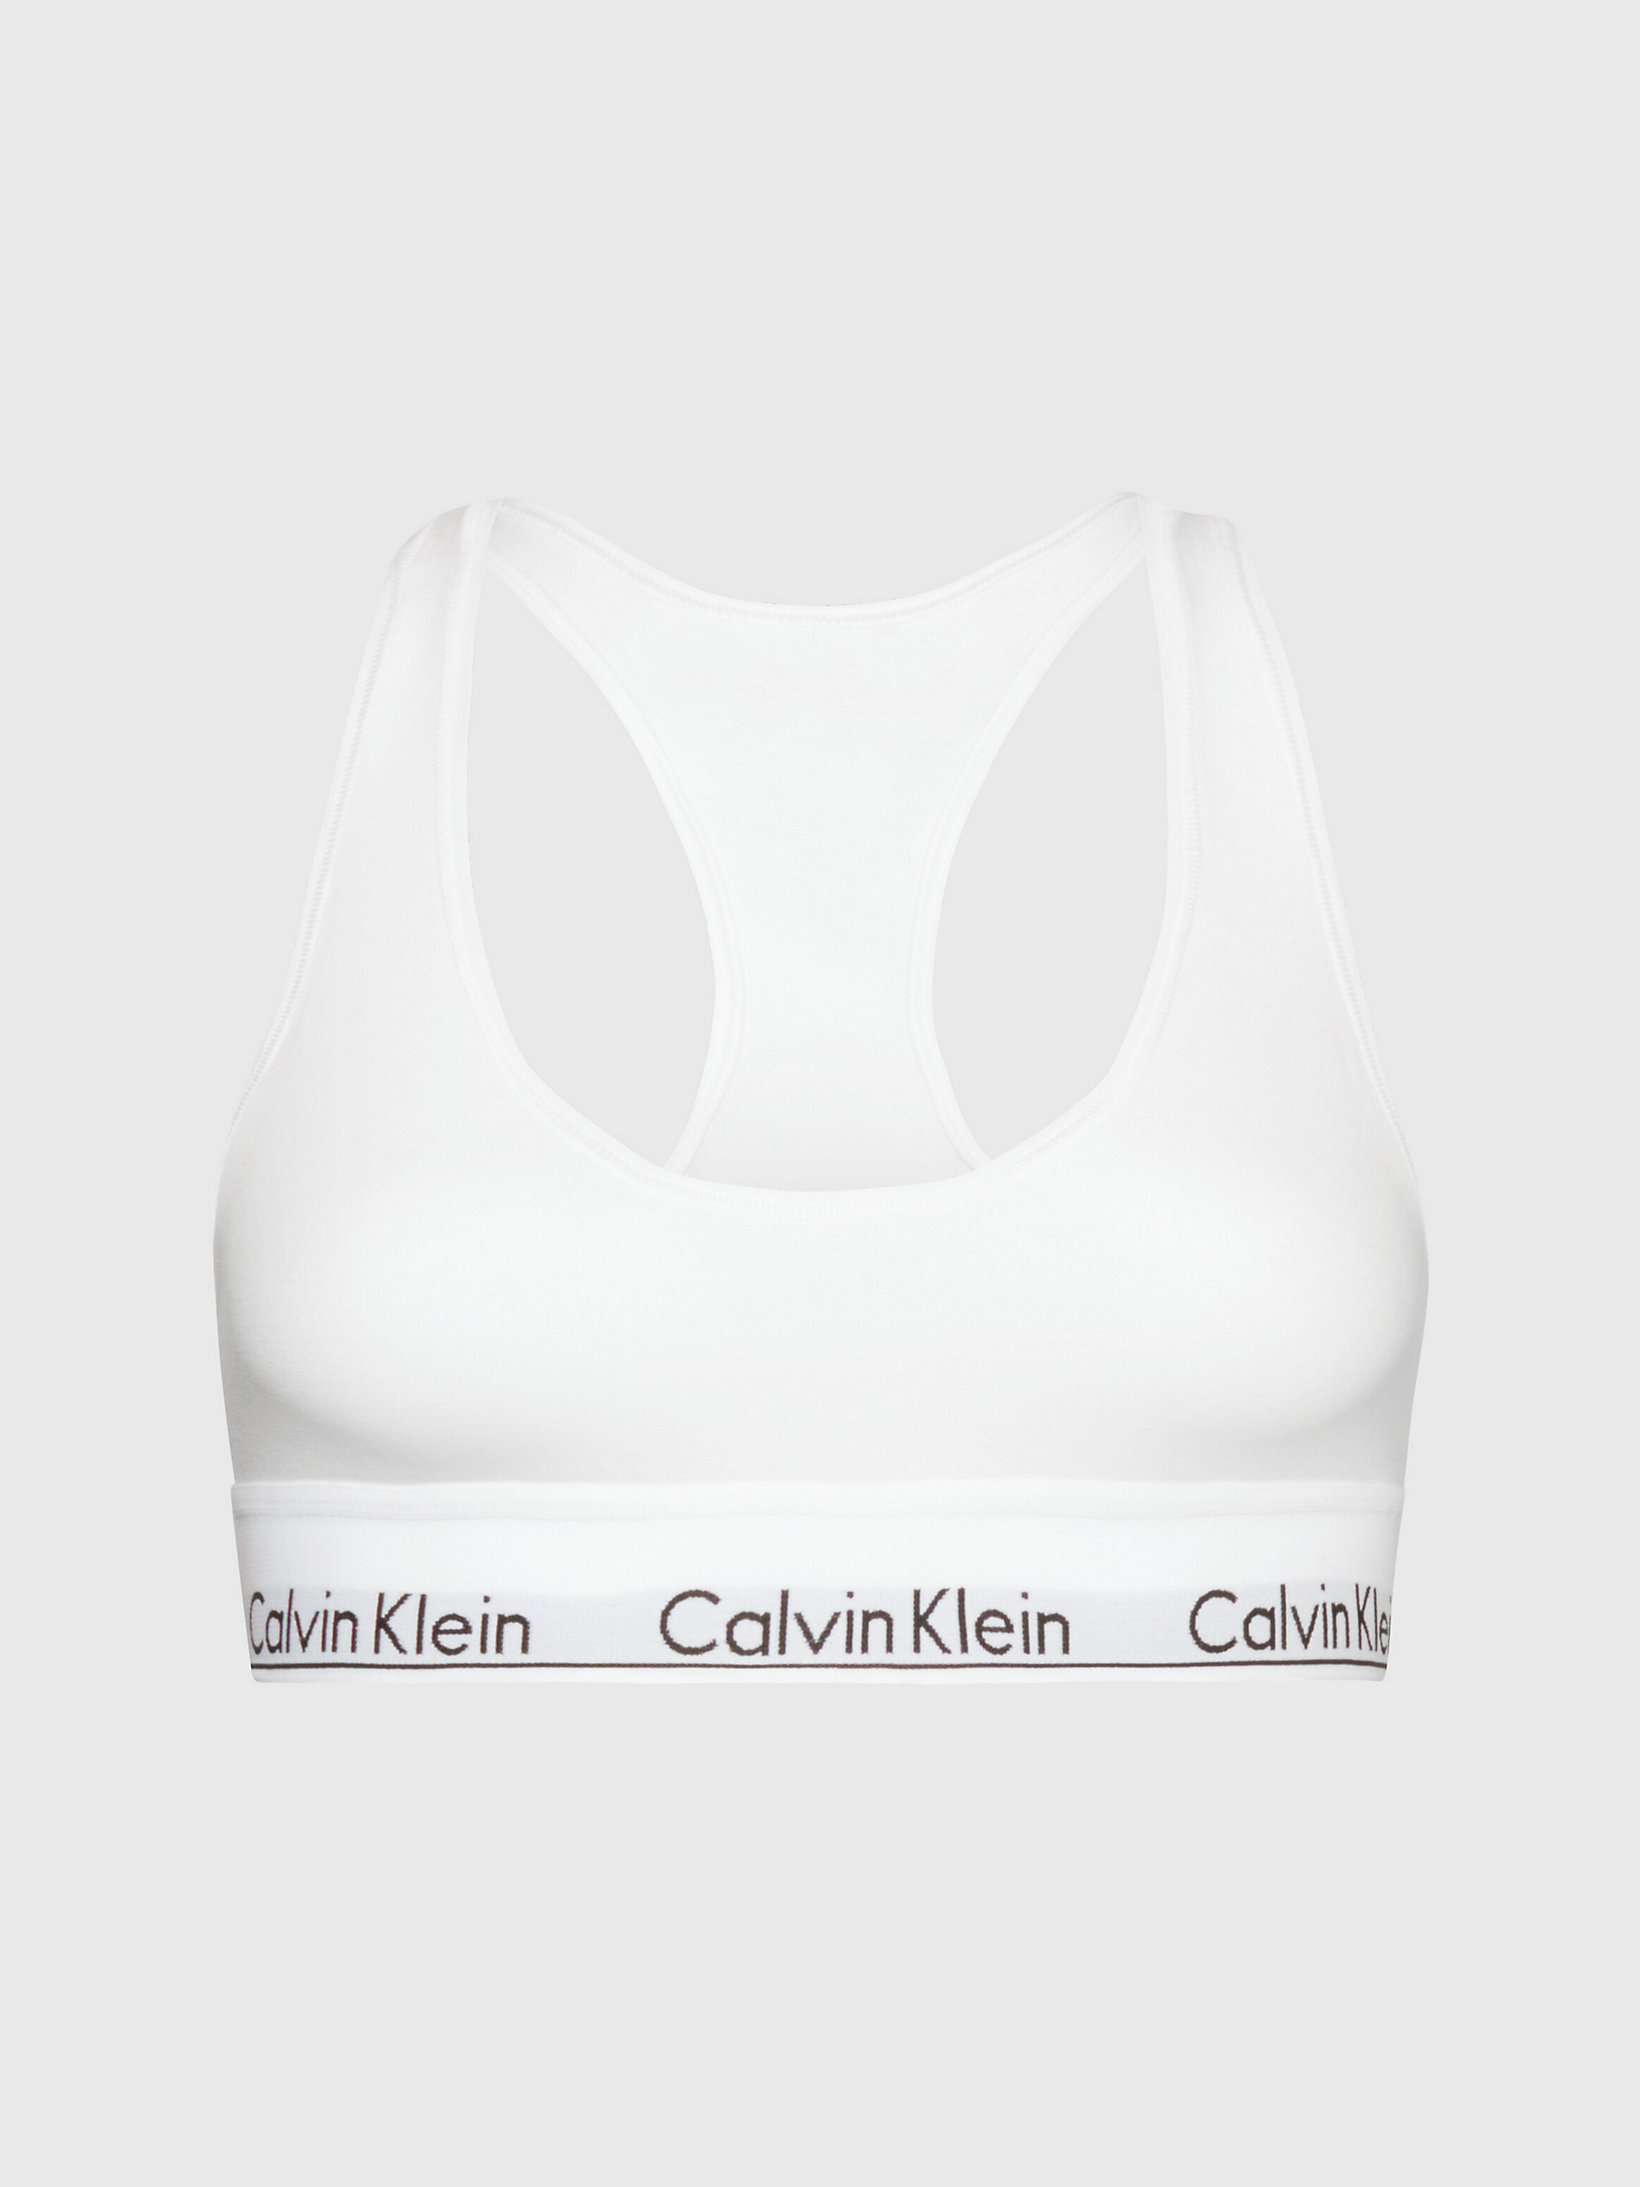 Corpiño - Modern Cotton > White > undefined mujer > Calvin Klein